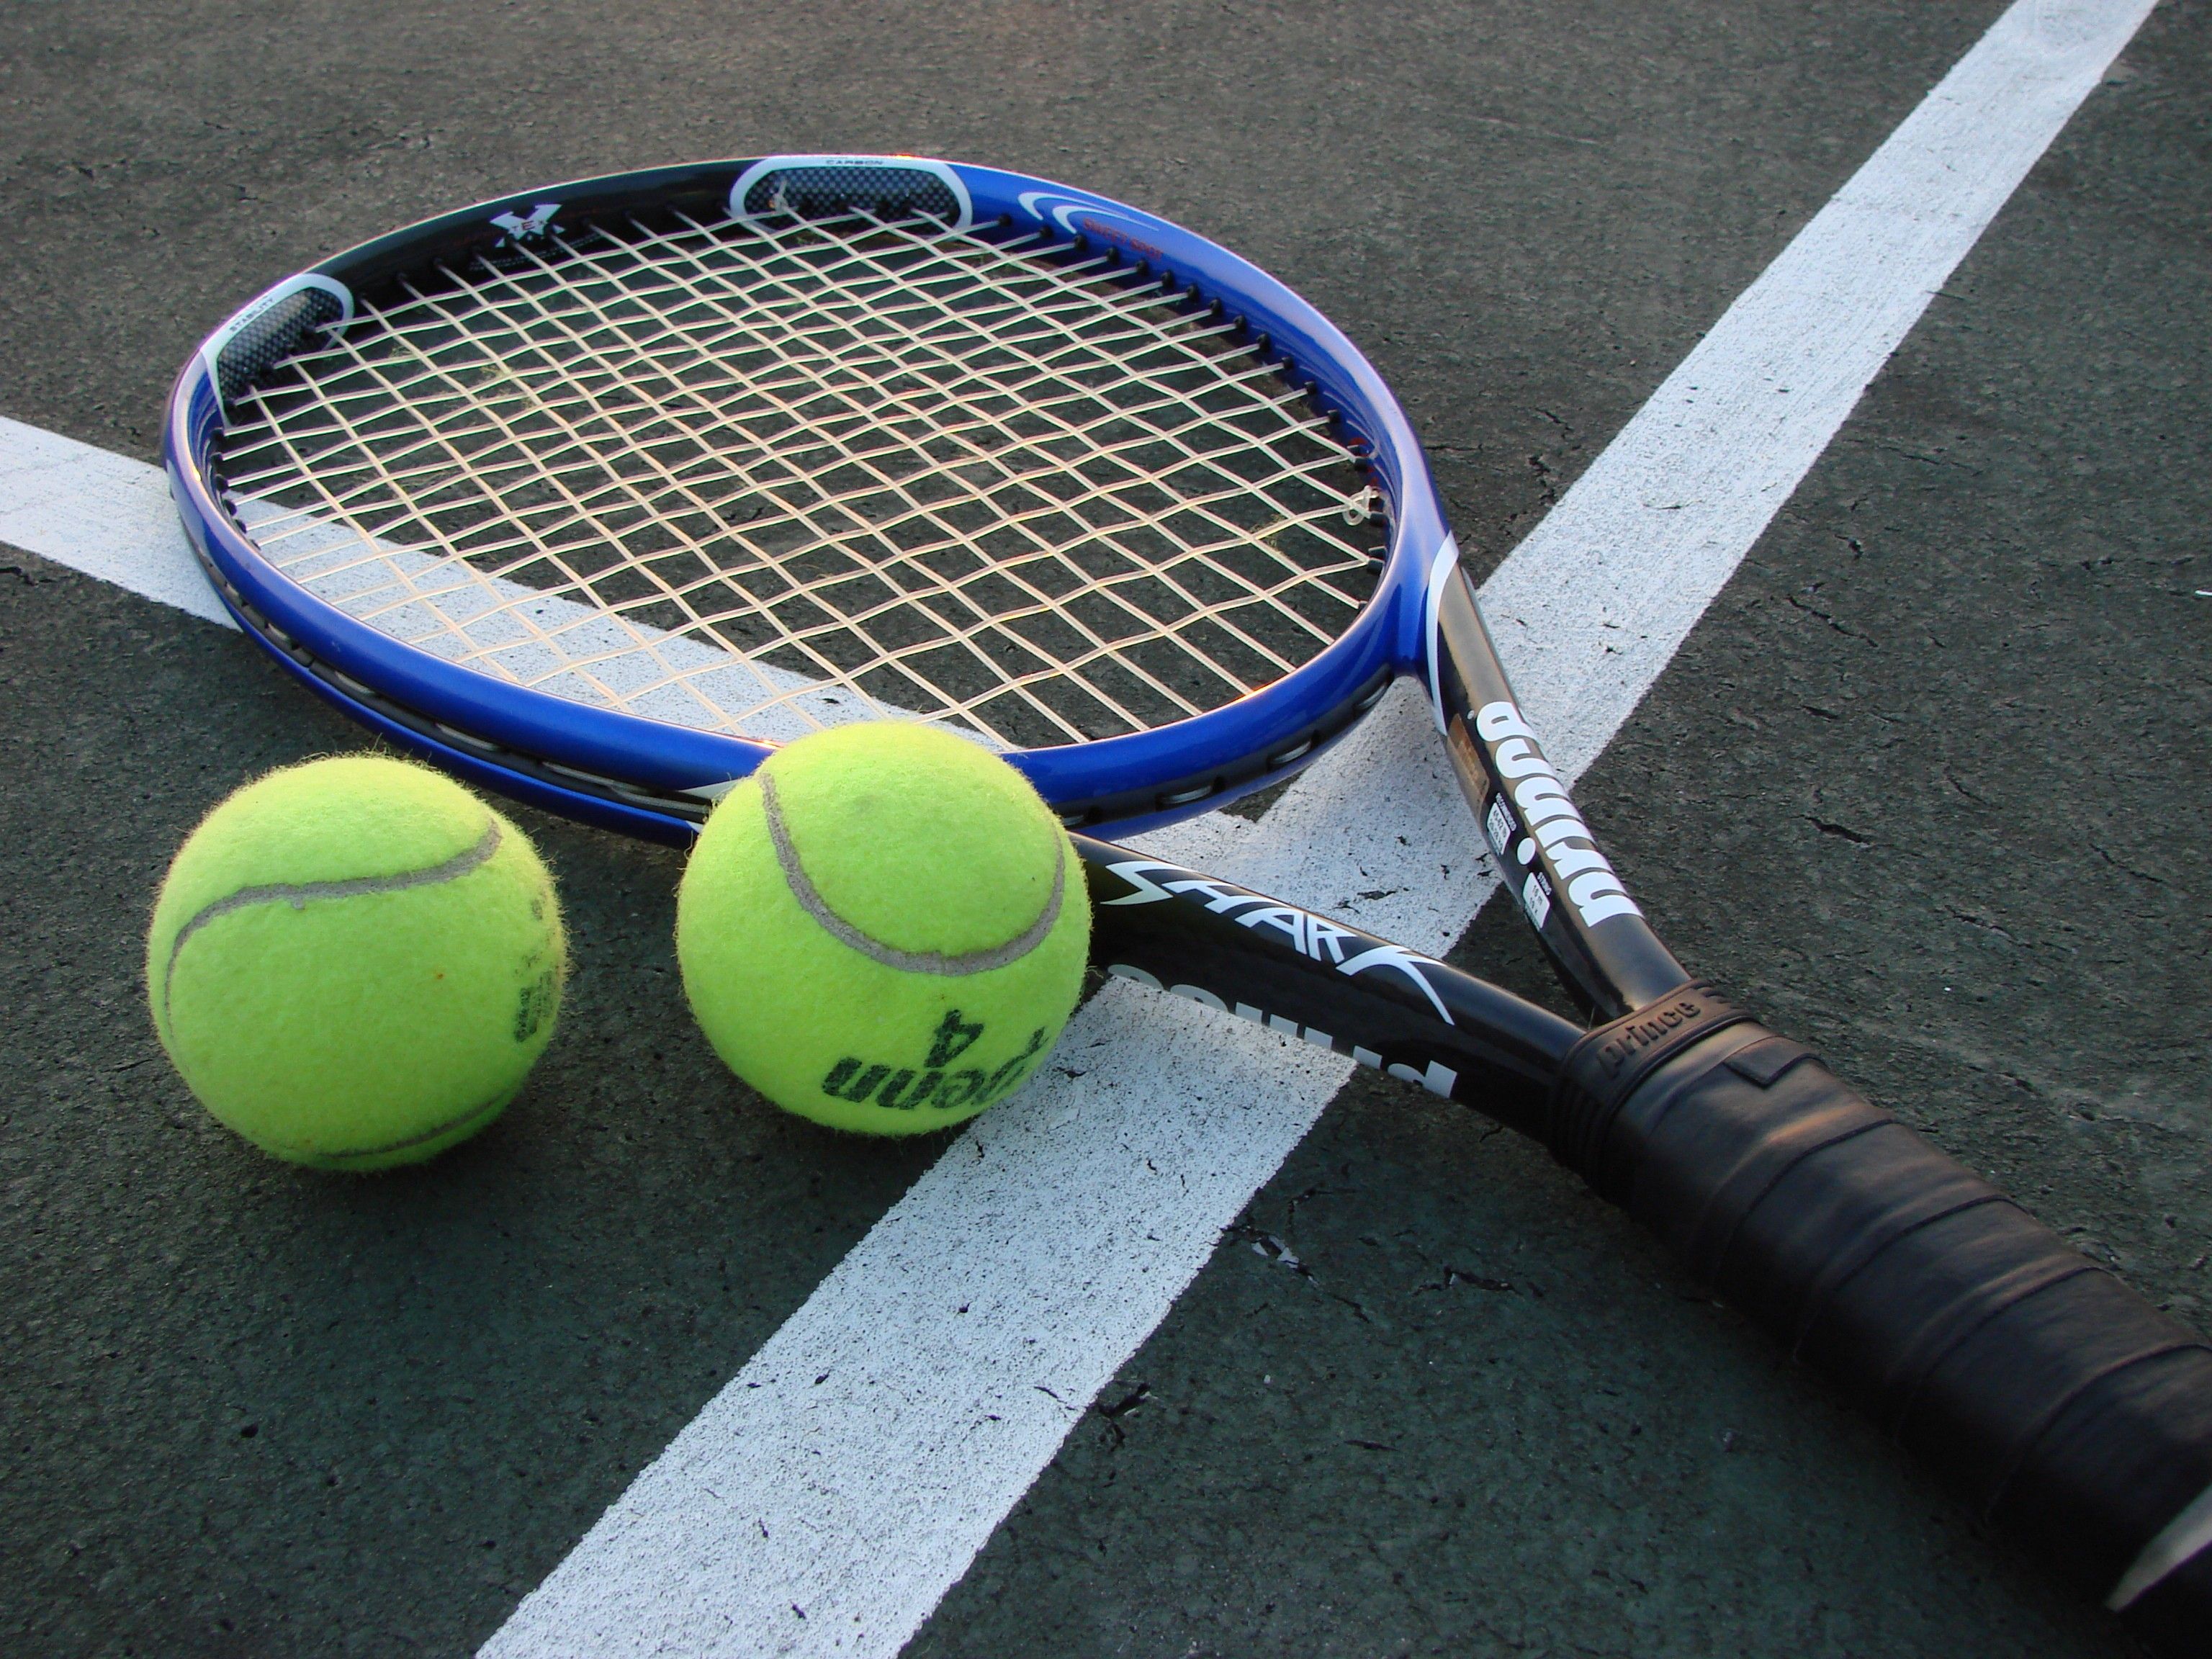 A tennis racket and two tennis balls on a tennis court. - Tennis